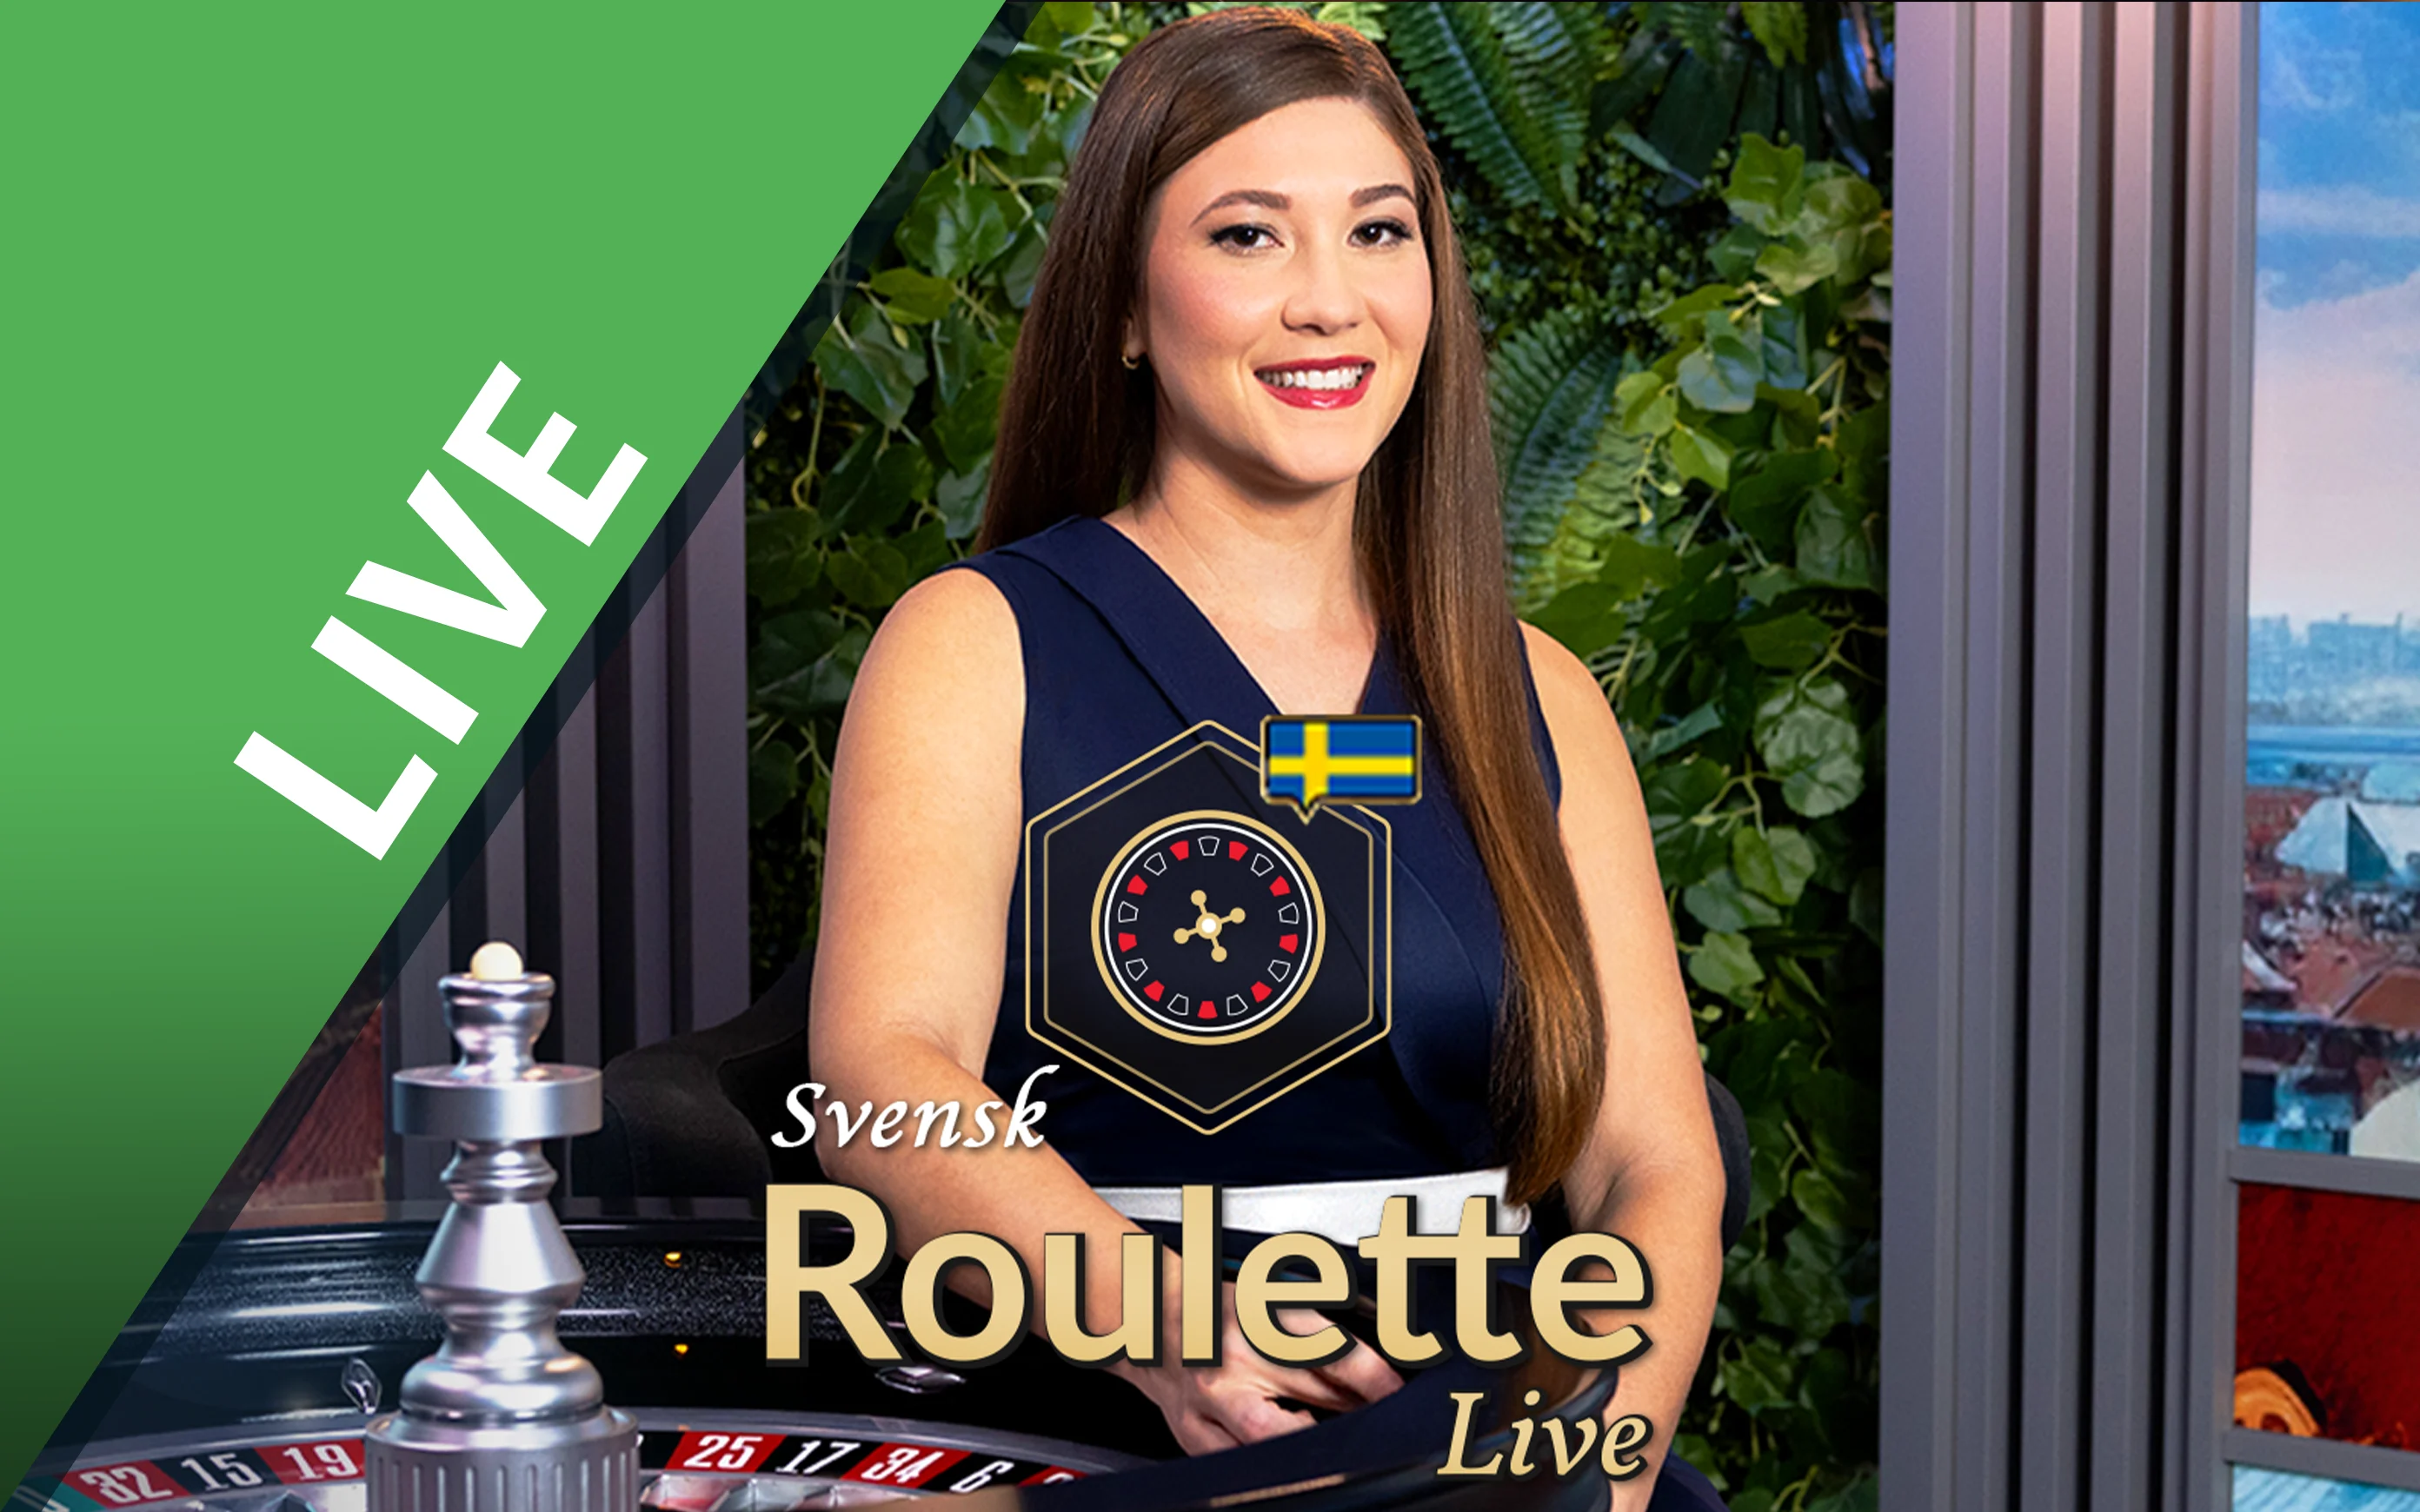 Play Swedish Roulette on Starcasino.be online casino